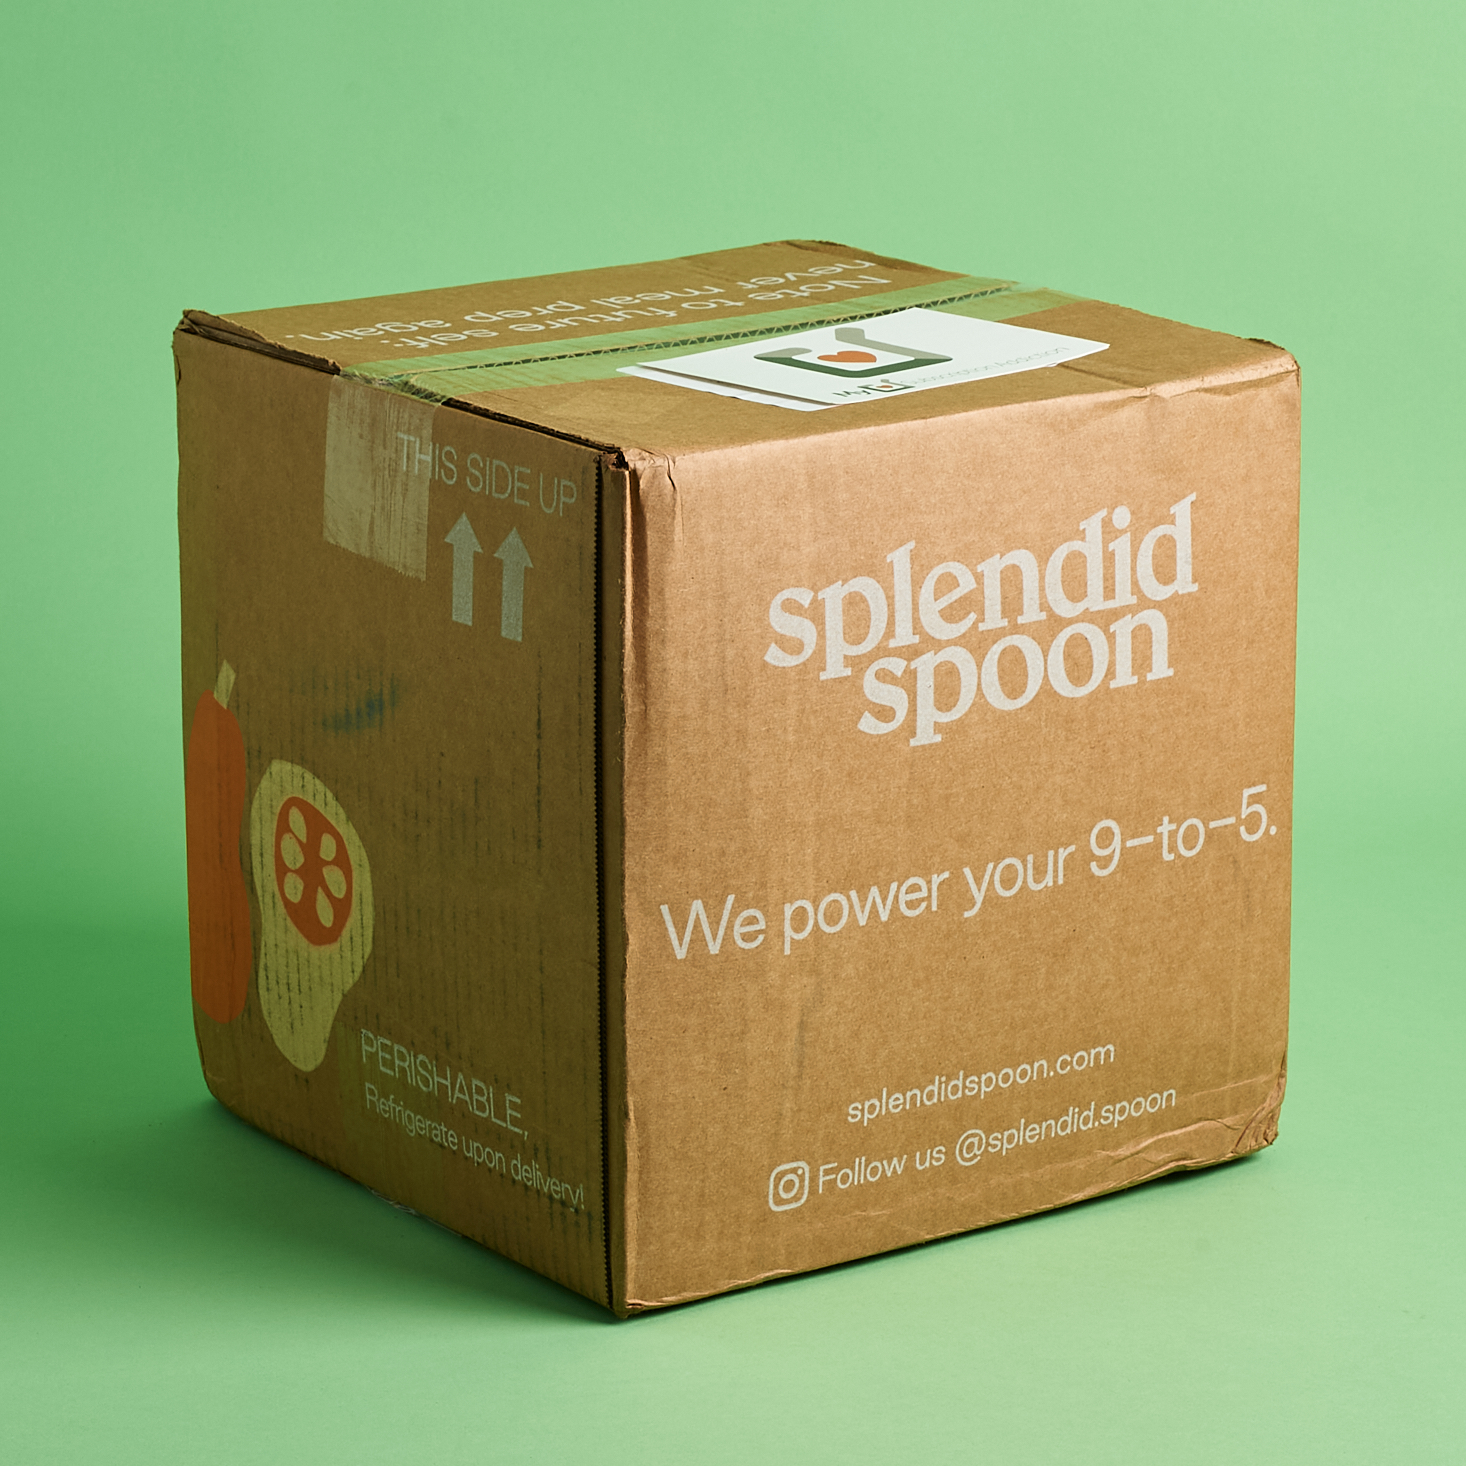 Splendid Spoon August 2020 Box